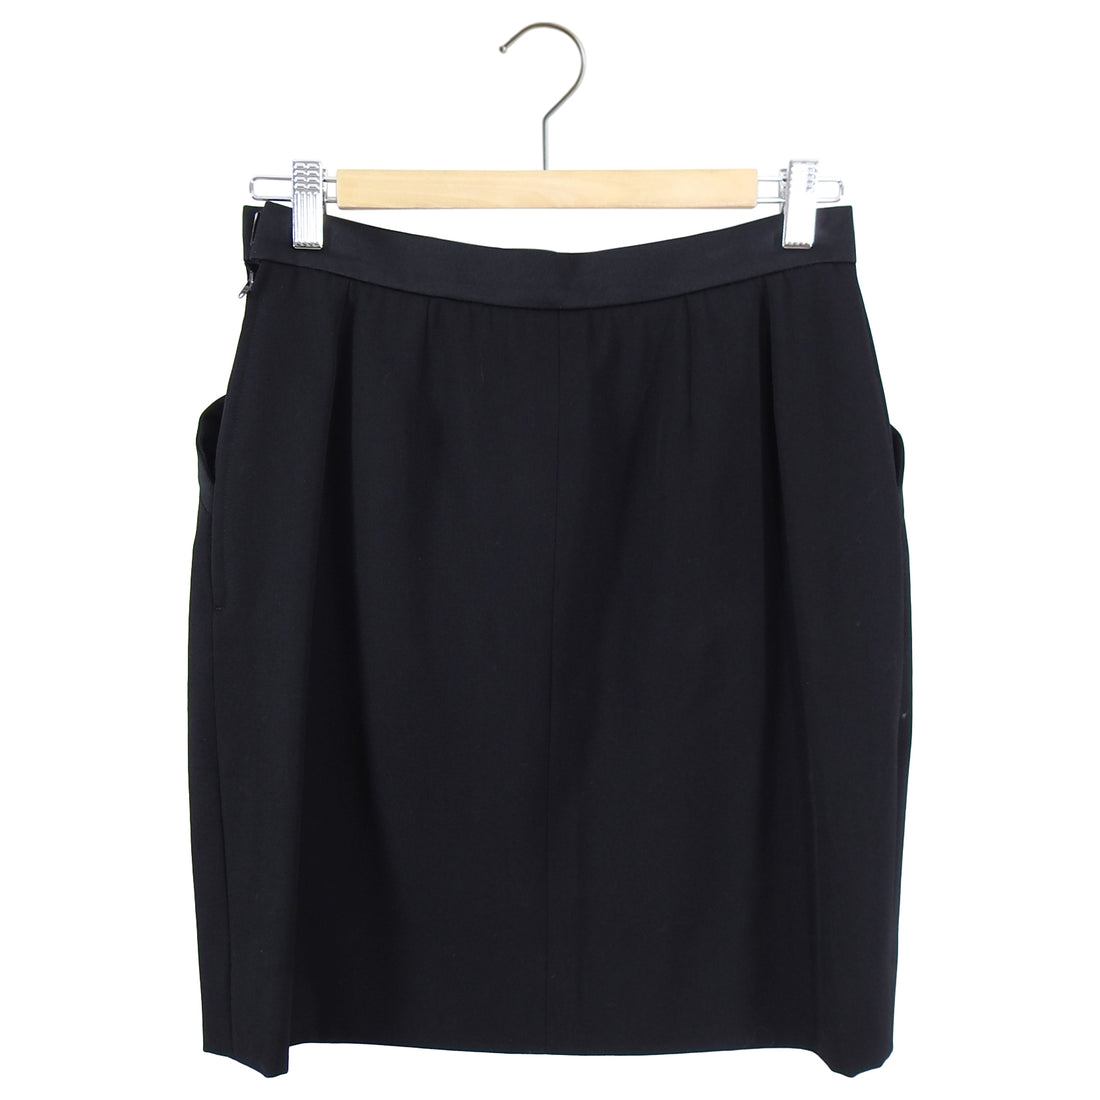 YSL Yves Saint Laurent Vintage 1980's Black High Waist Pencil Mini Skirt - S / 6